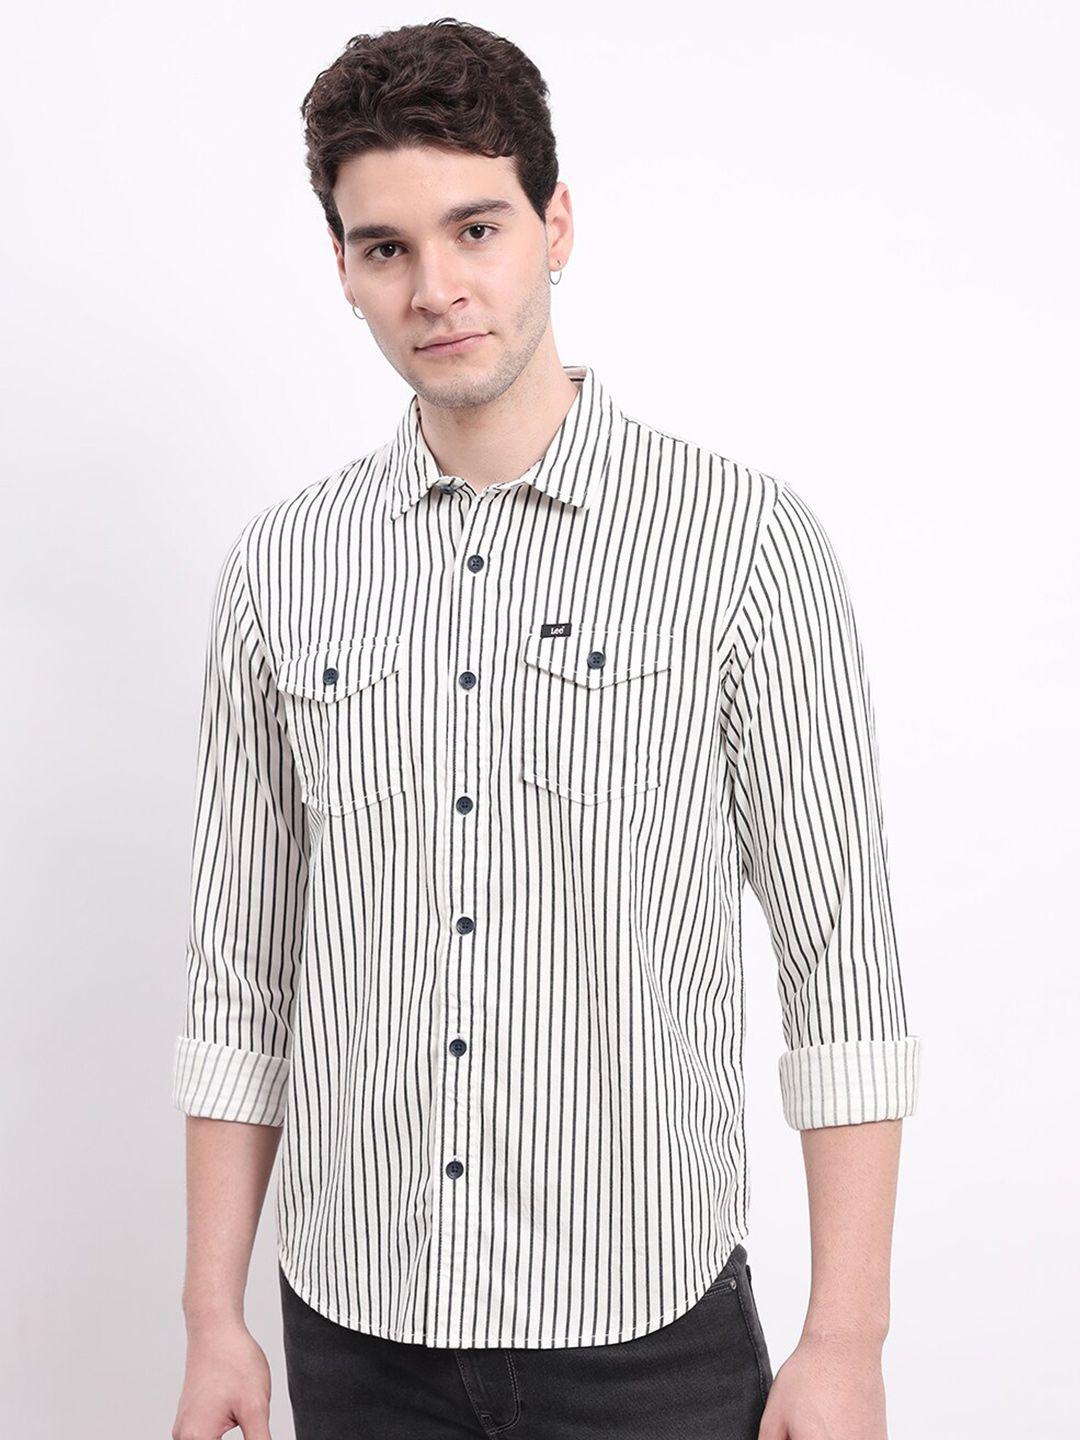 lee spread collar striped classic twill pure cotton shirt